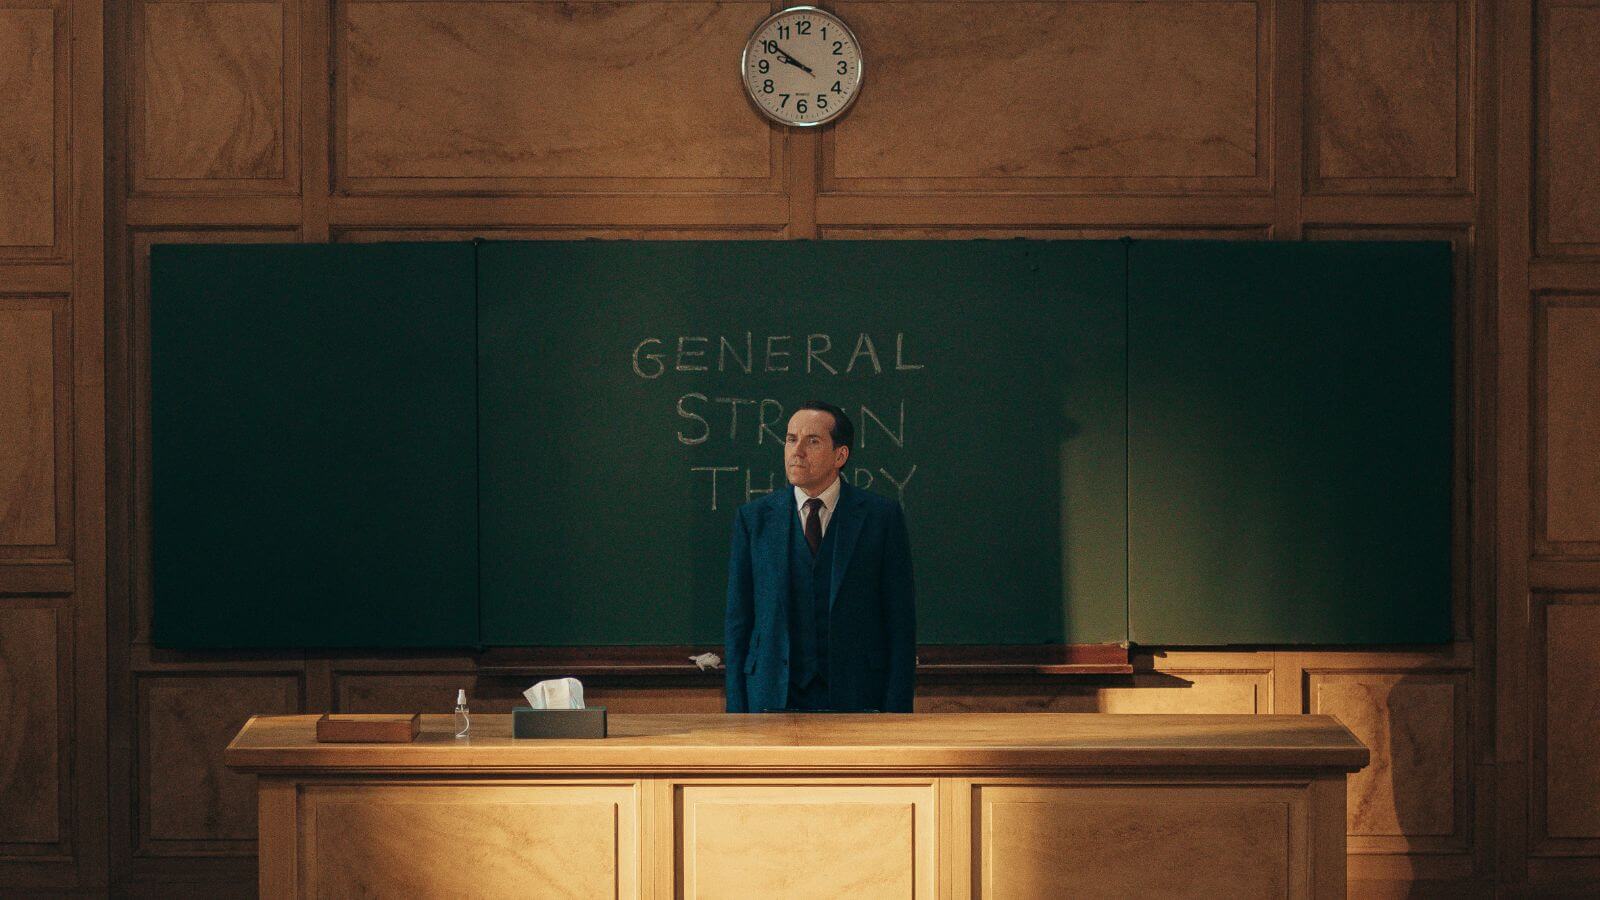 Ben Miller as Professor T in a classroom setting.